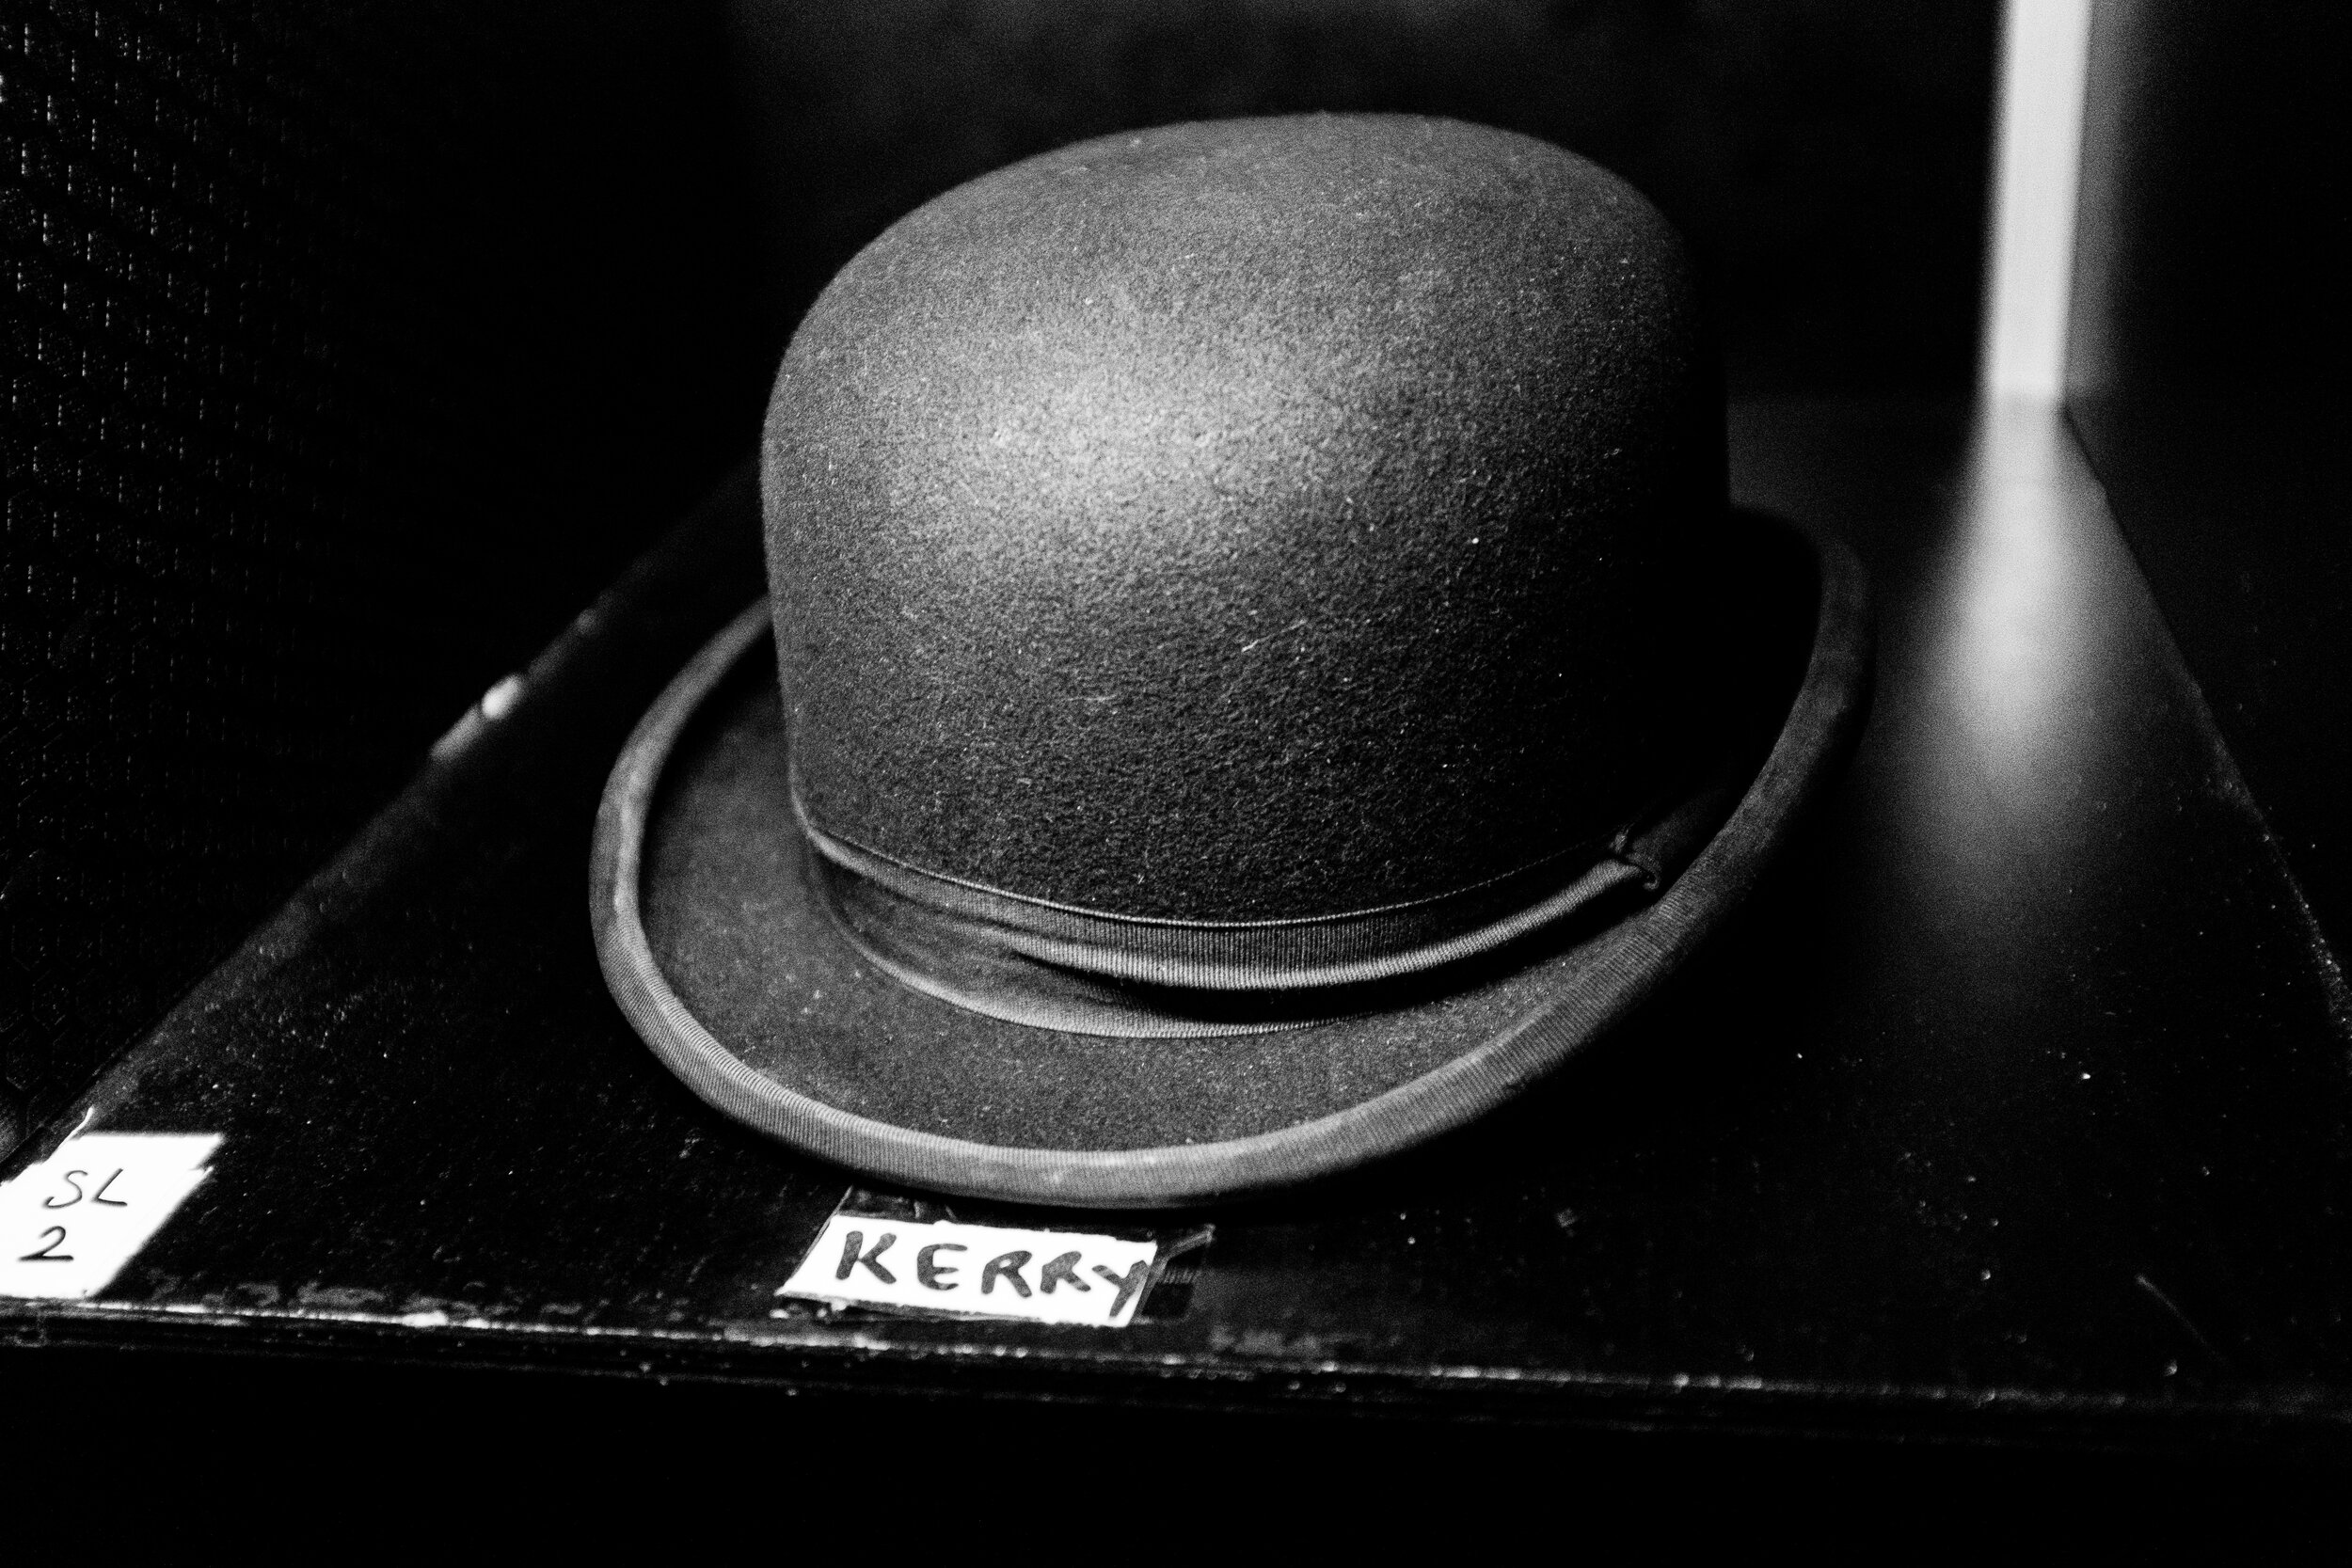 Kerry's Hat